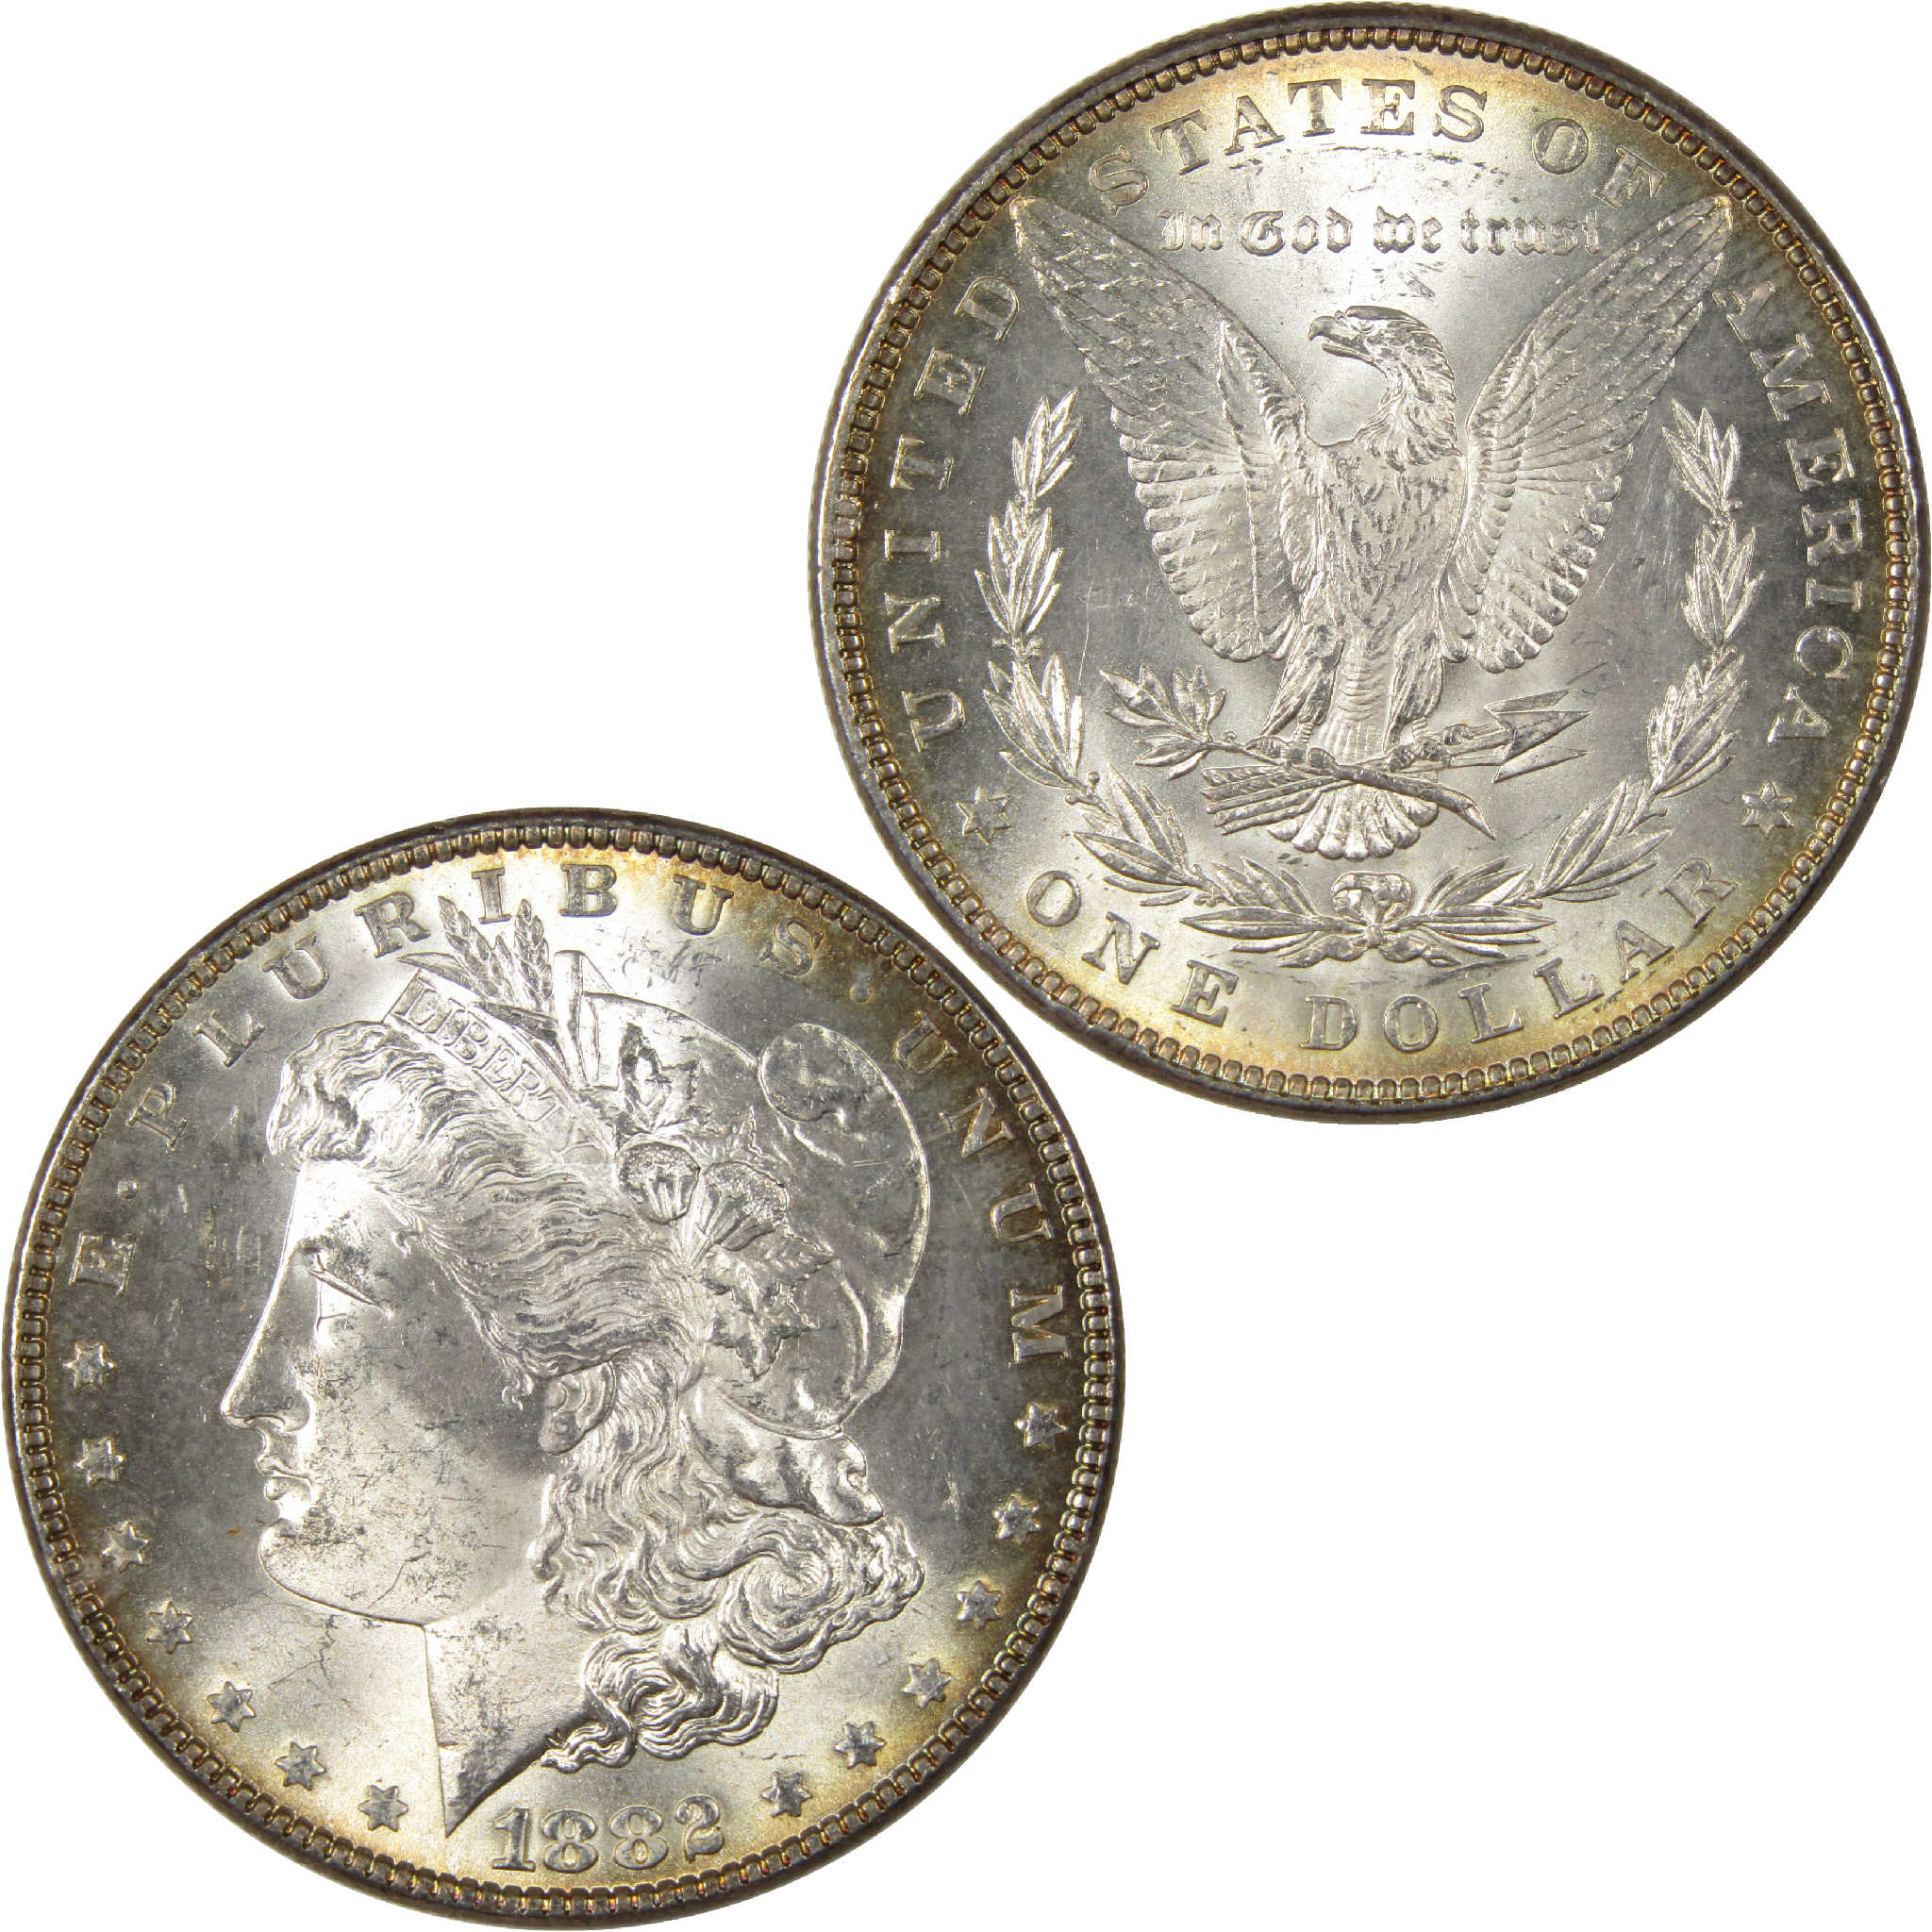 1882 Morgan Dollar BU Choice Uncirculated Silver $1 Coin - Morgan coin - Morgan silver dollar - Morgan silver dollar for sale - Profile Coins &amp; Collectibles